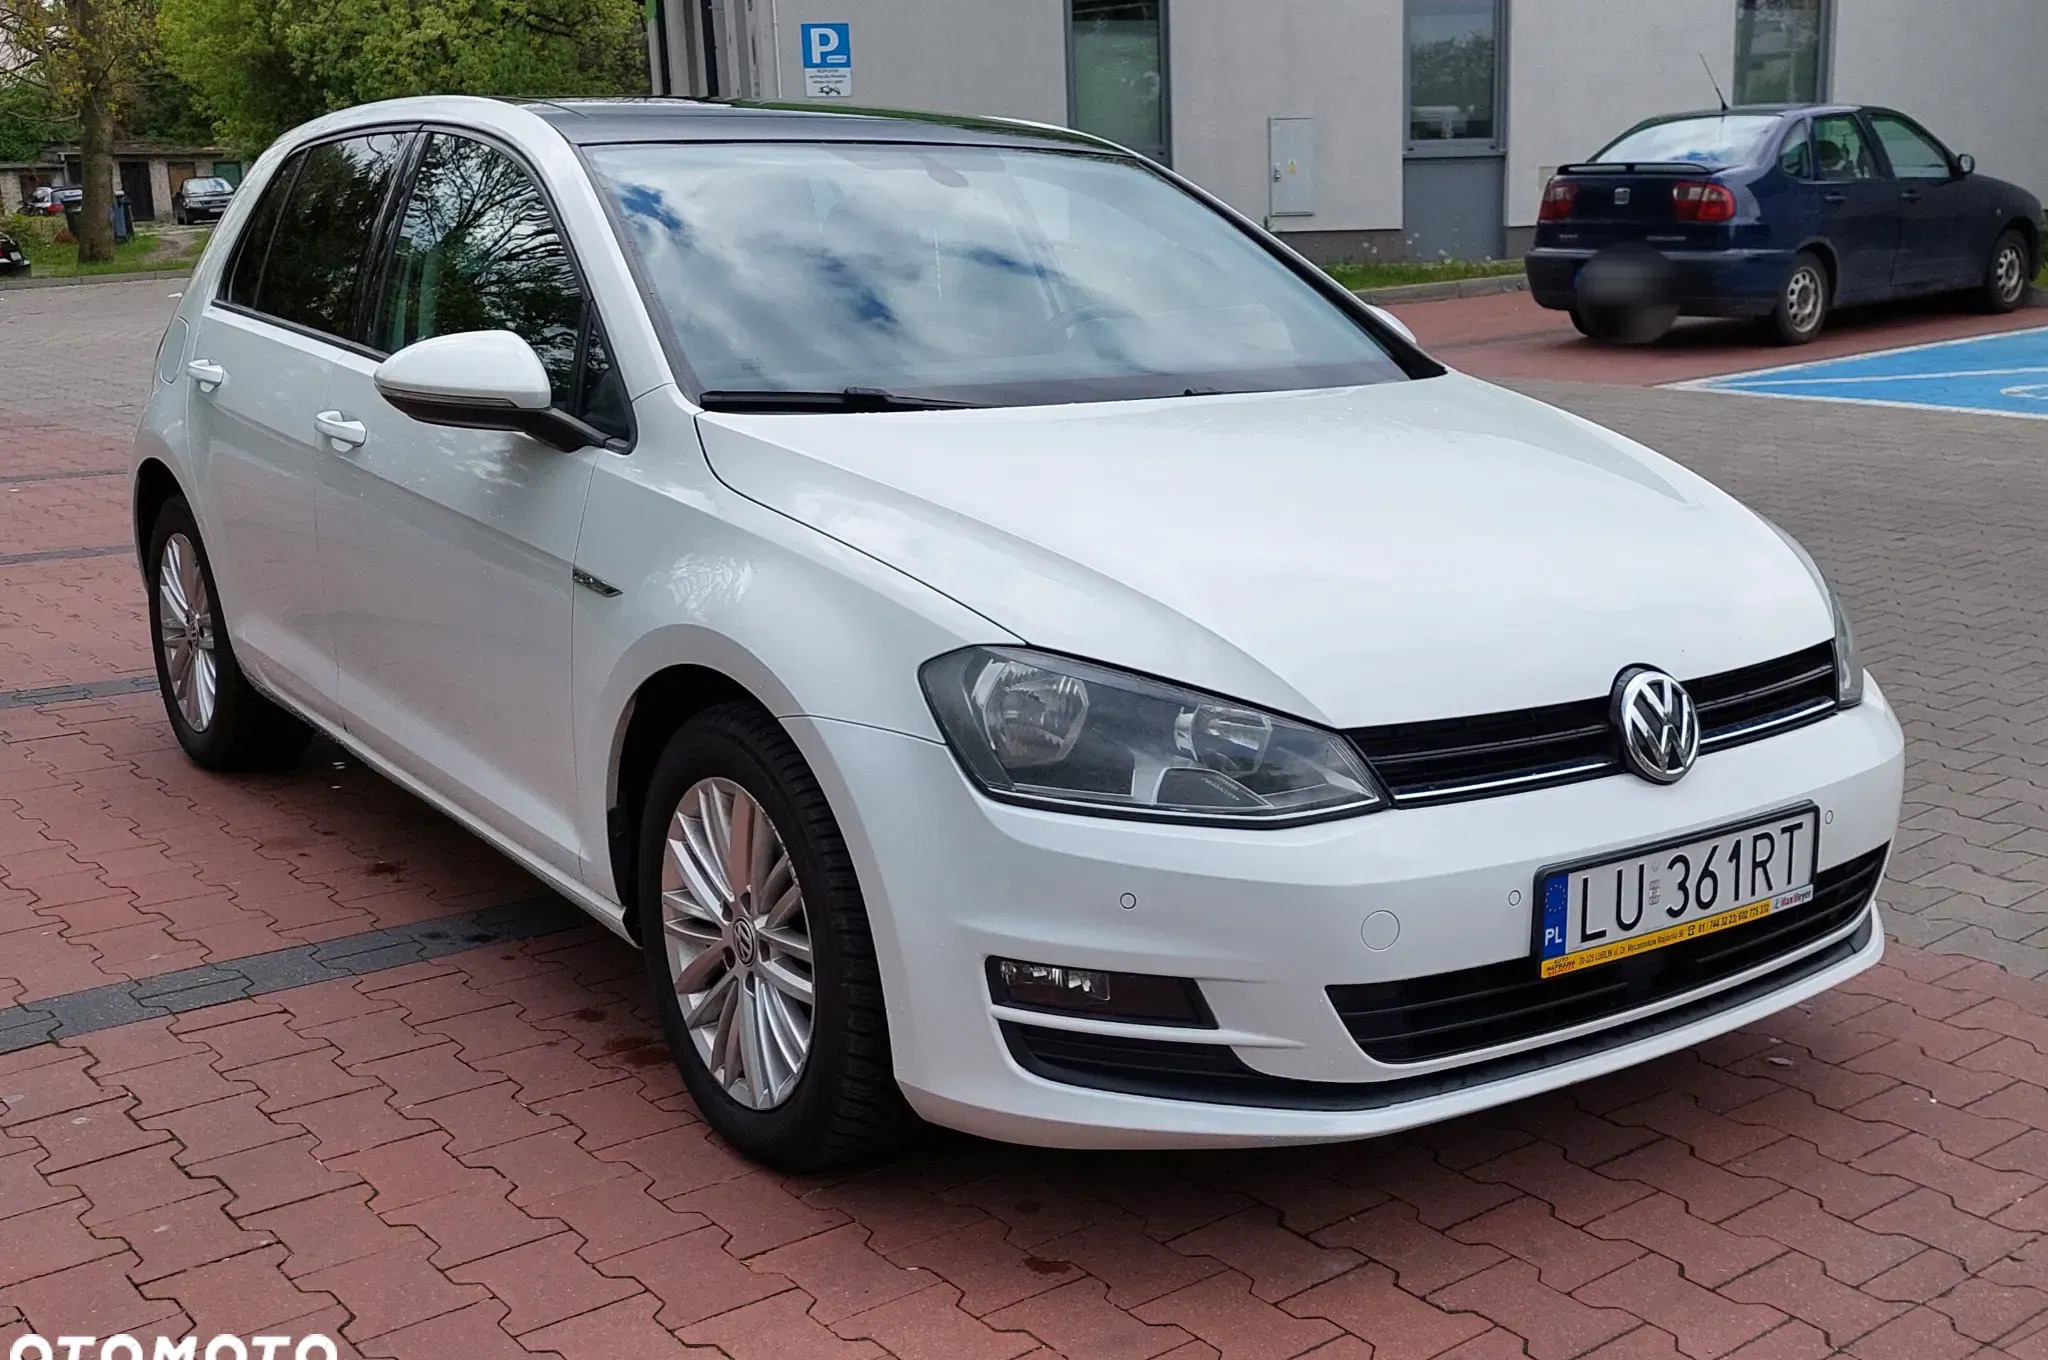 volkswagen Volkswagen Golf cena 53900 przebieg: 95500, rok produkcji 2014 z Lublin